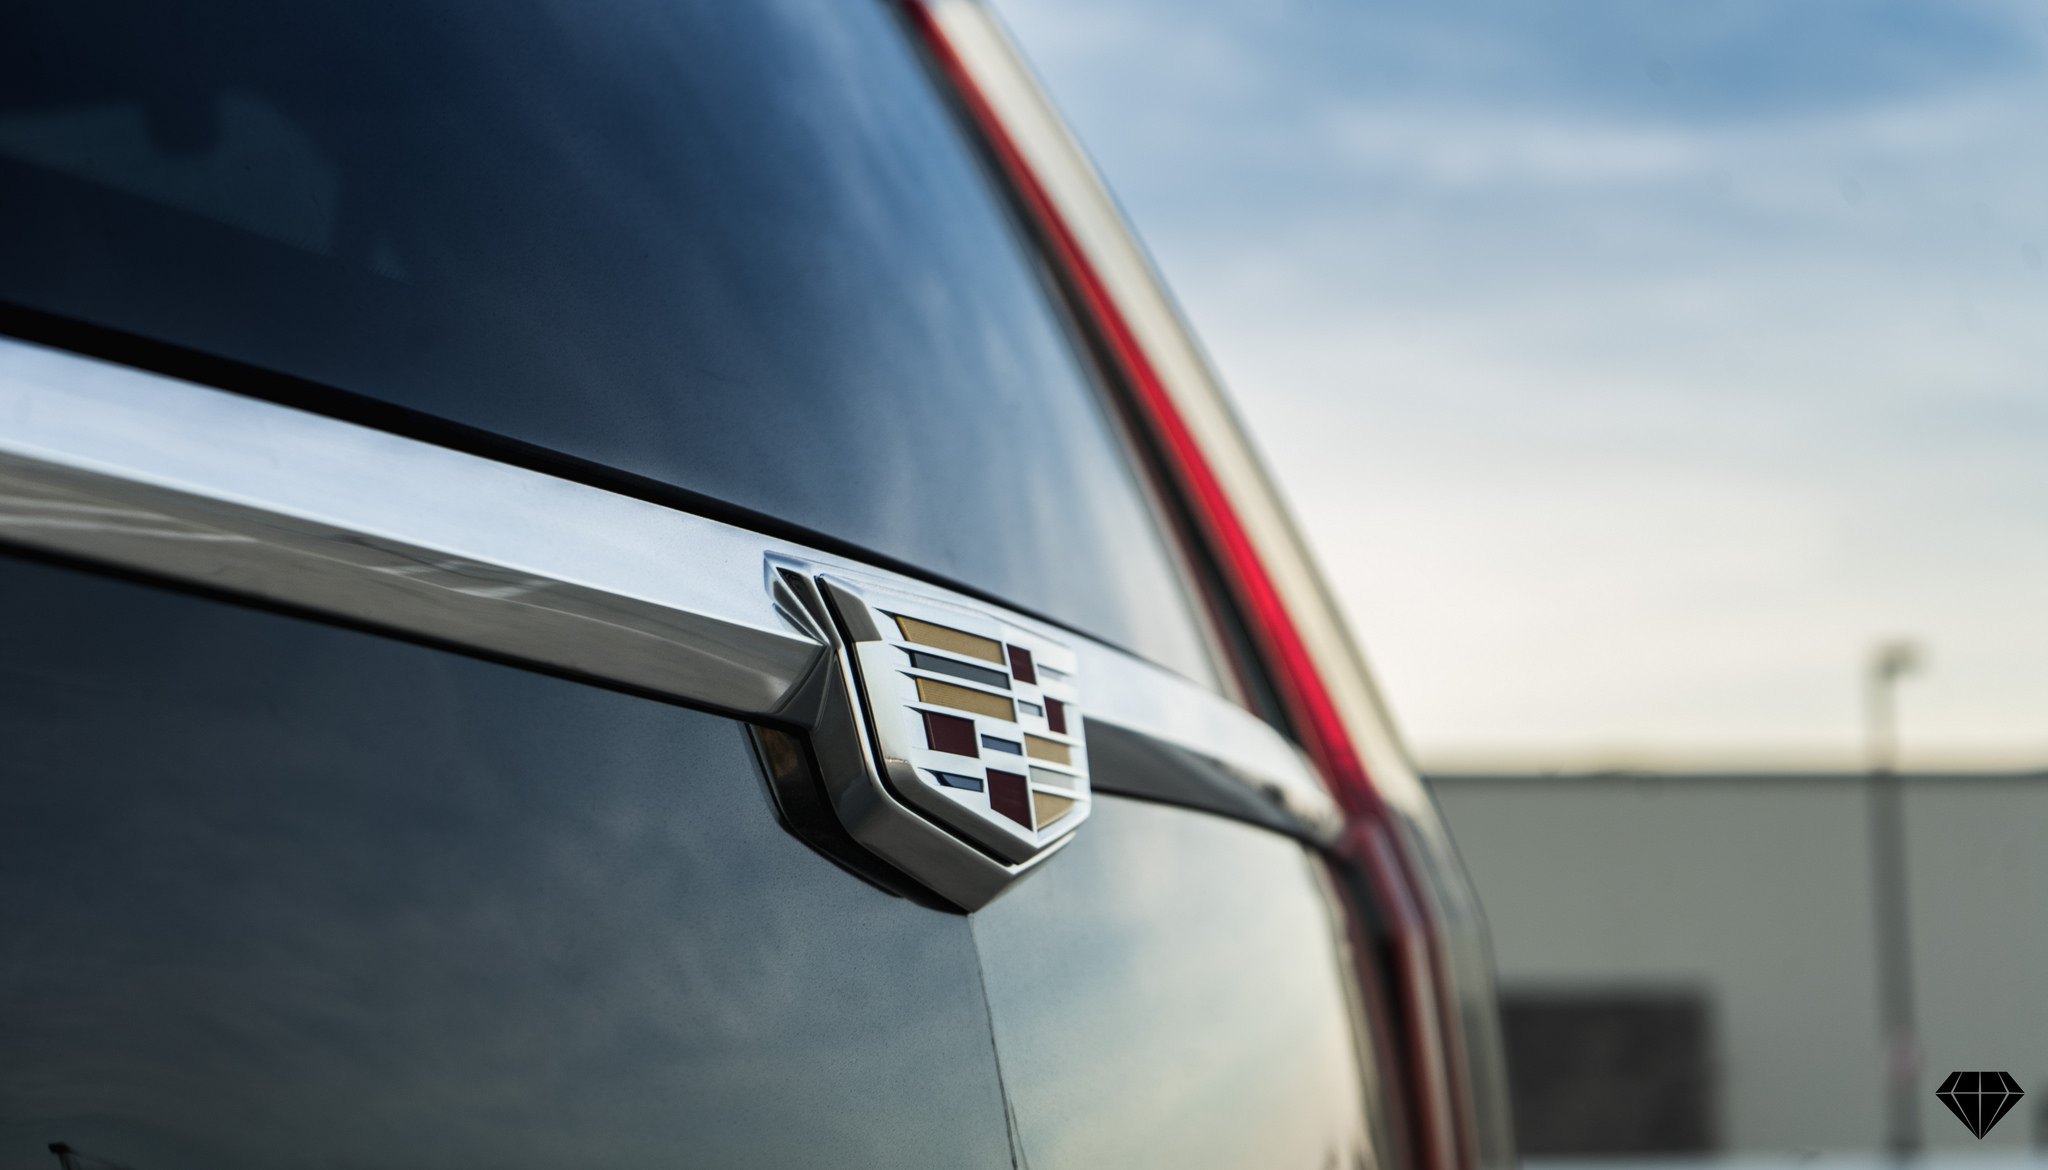 Aftermarket Chrome Emblem on Black Cadillac Escalade - Photo by Blaque Diamond Wheels